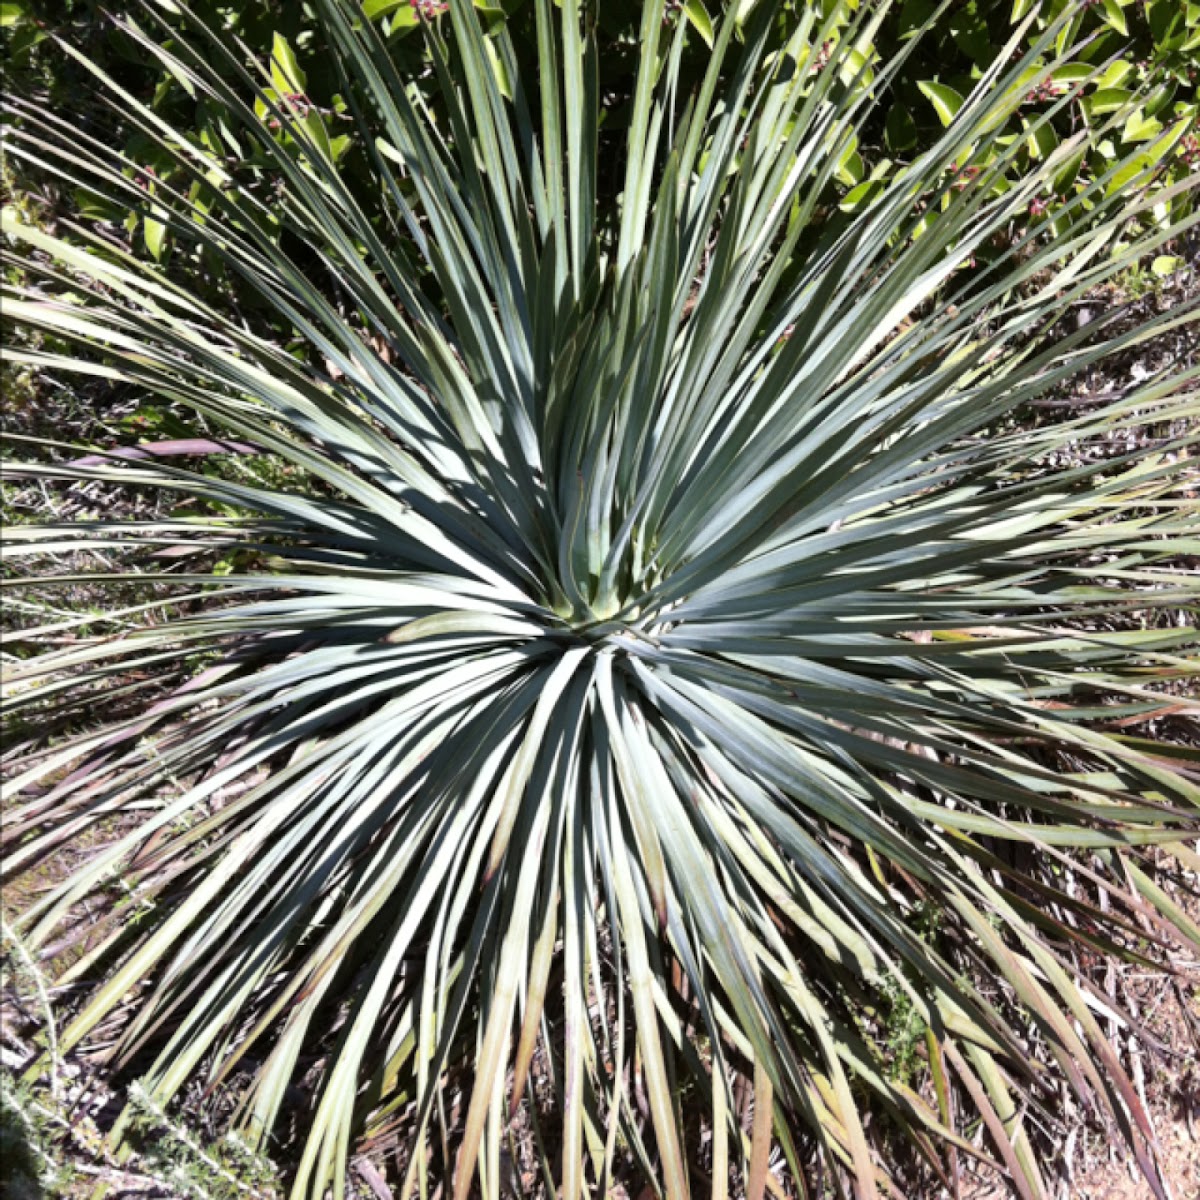 Chaparral Yucca